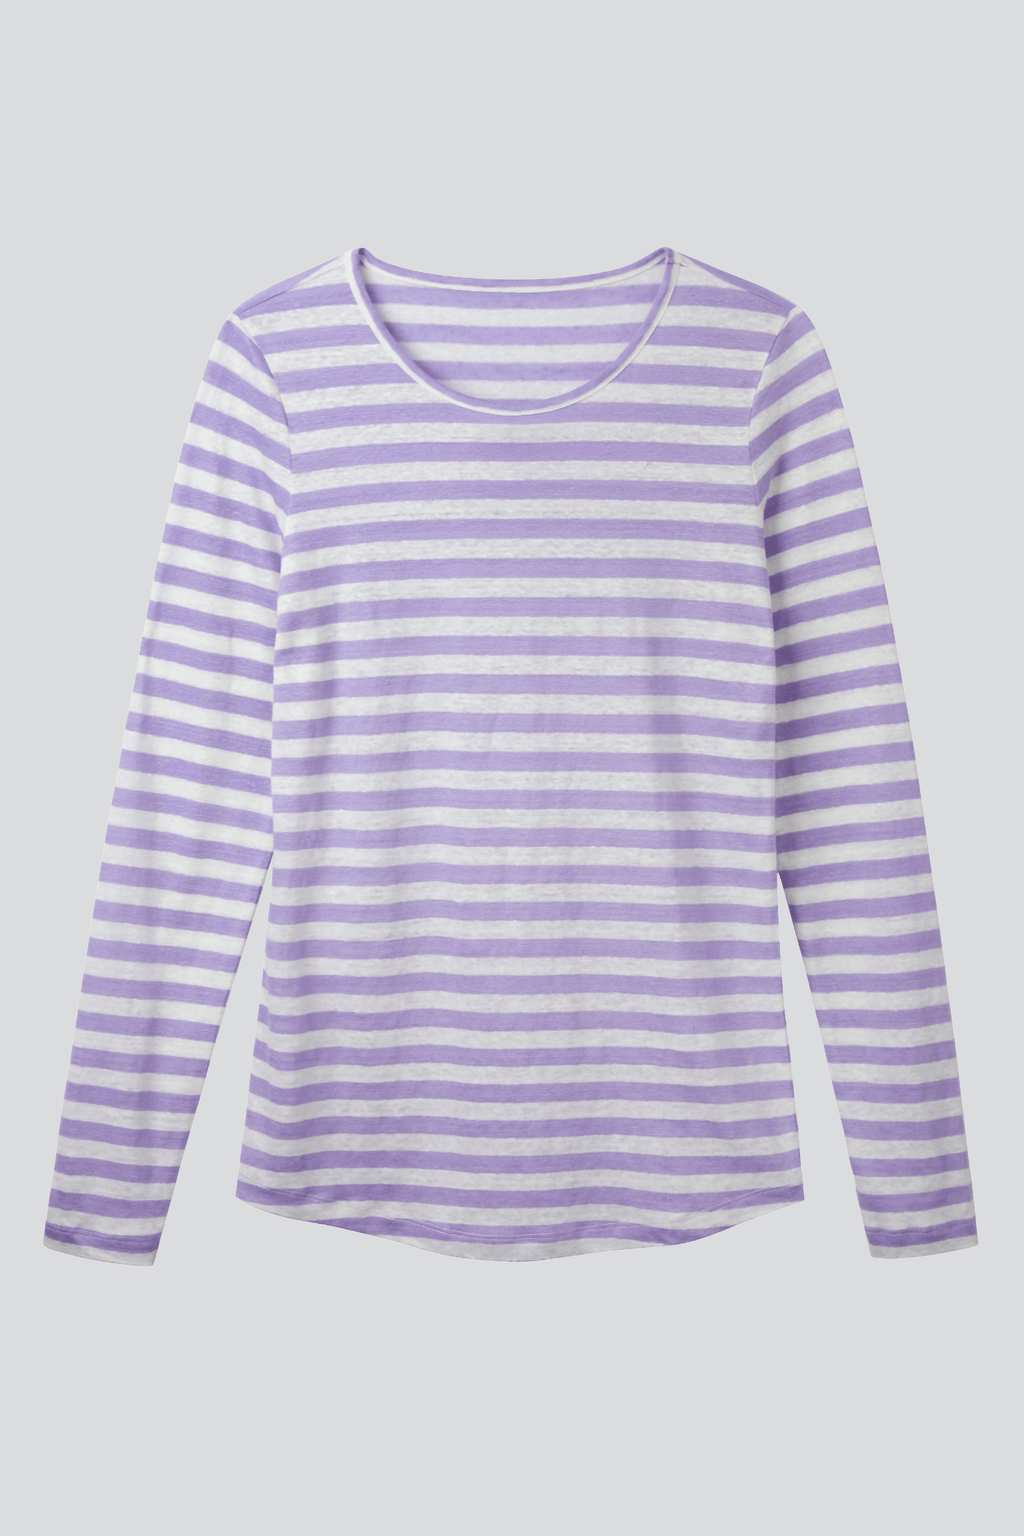 Zelos Striped Keyhole Back Long Sleeve Shirt Purple White Medium